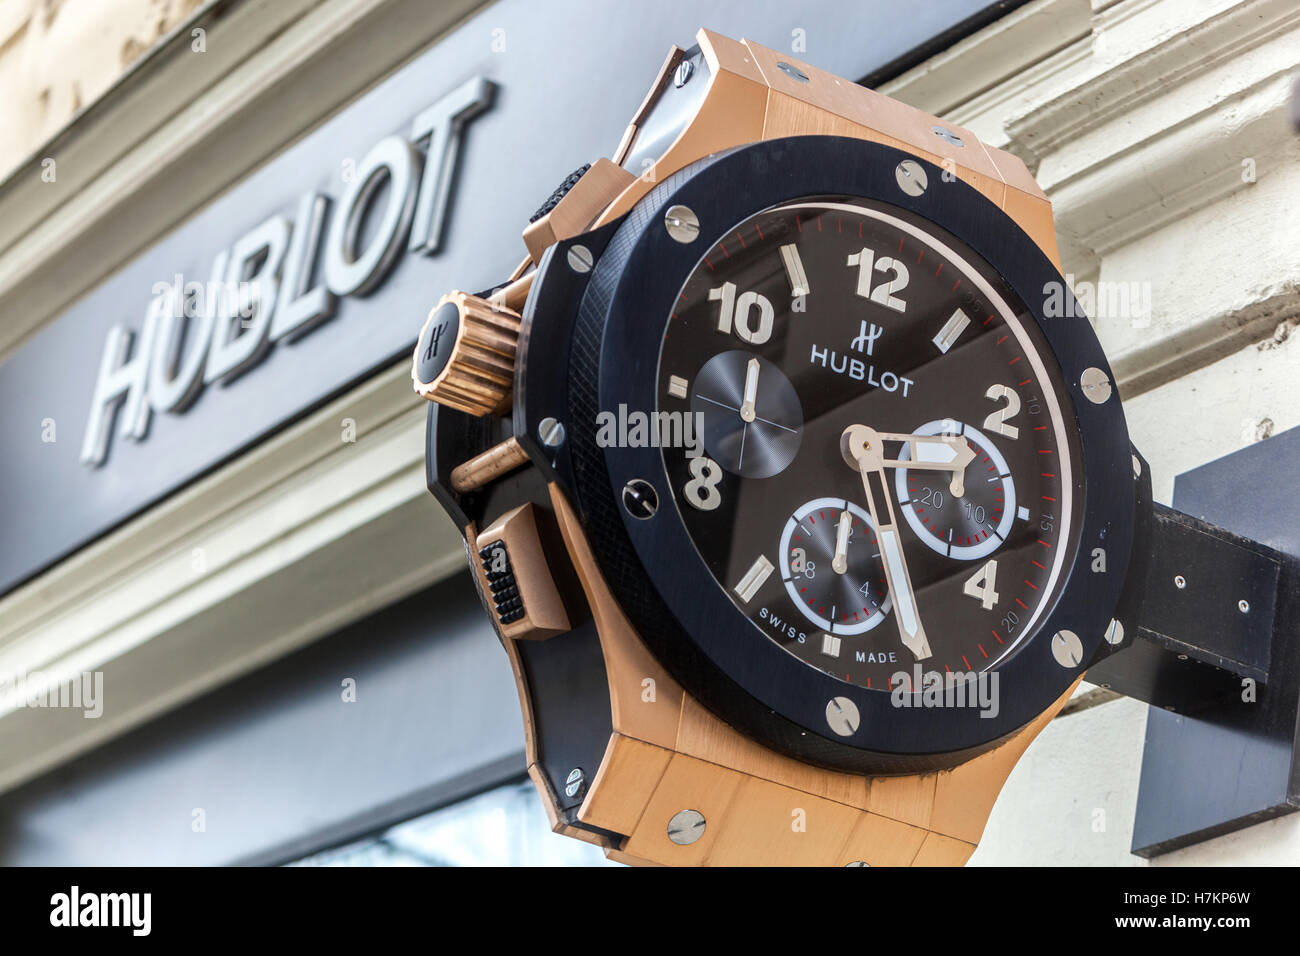 Hublot reloj tienda de lujo signo reloj suizo tienda en Jachymova calle  Praga Ciudad Vieja República Checa Fotografía de stock - Alamy